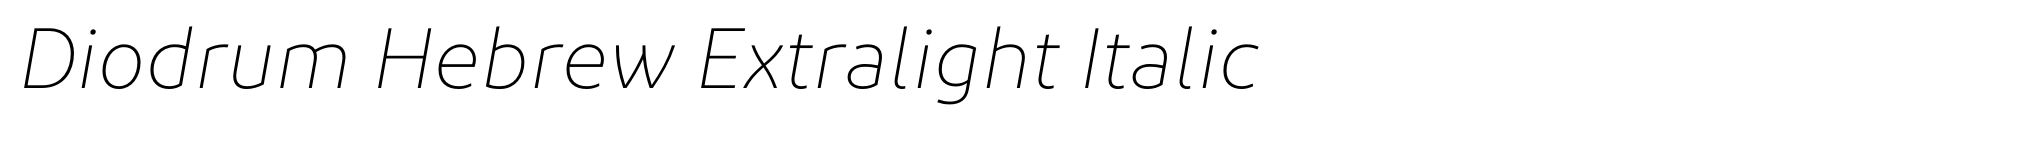 Diodrum Hebrew Extralight Italic image